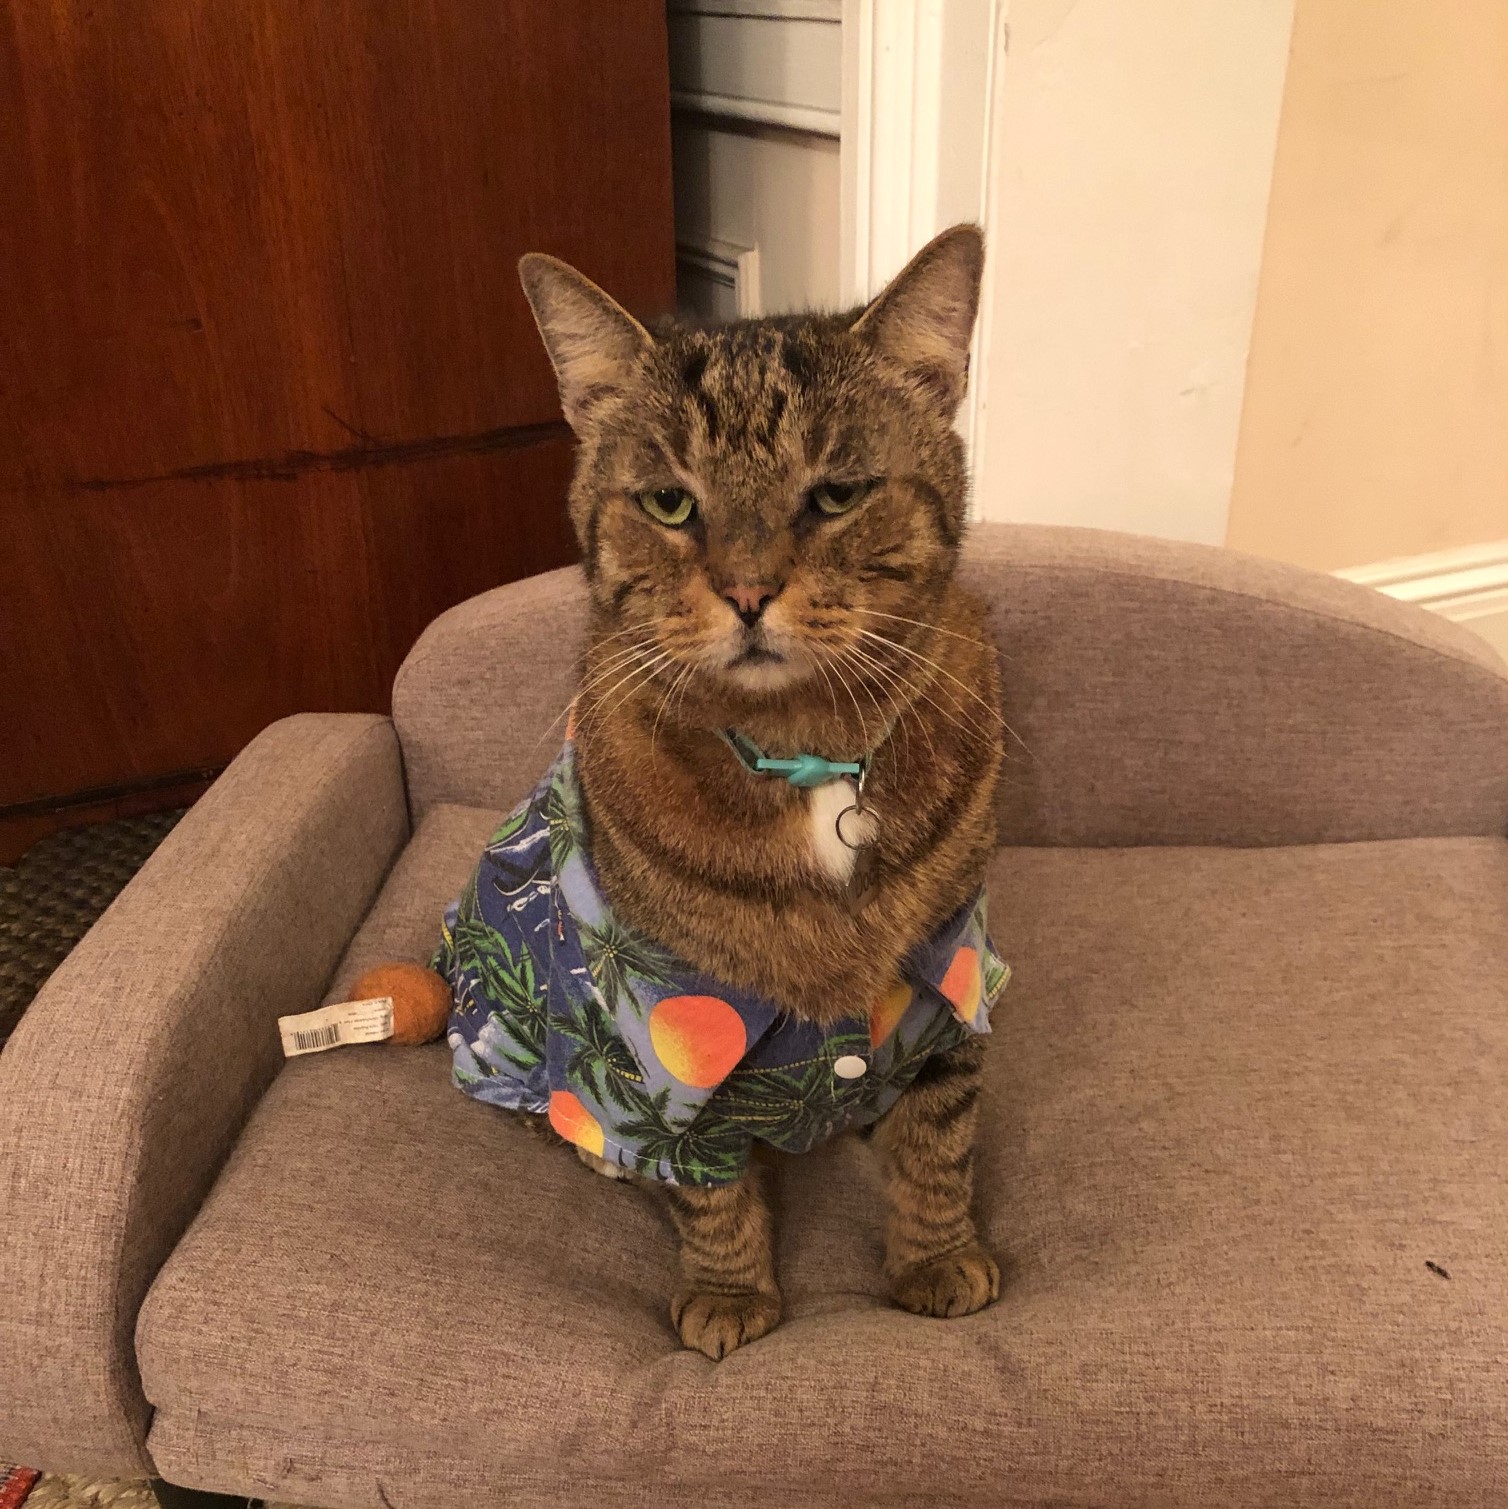 The Key West cat who wears a Hawaiian shirt